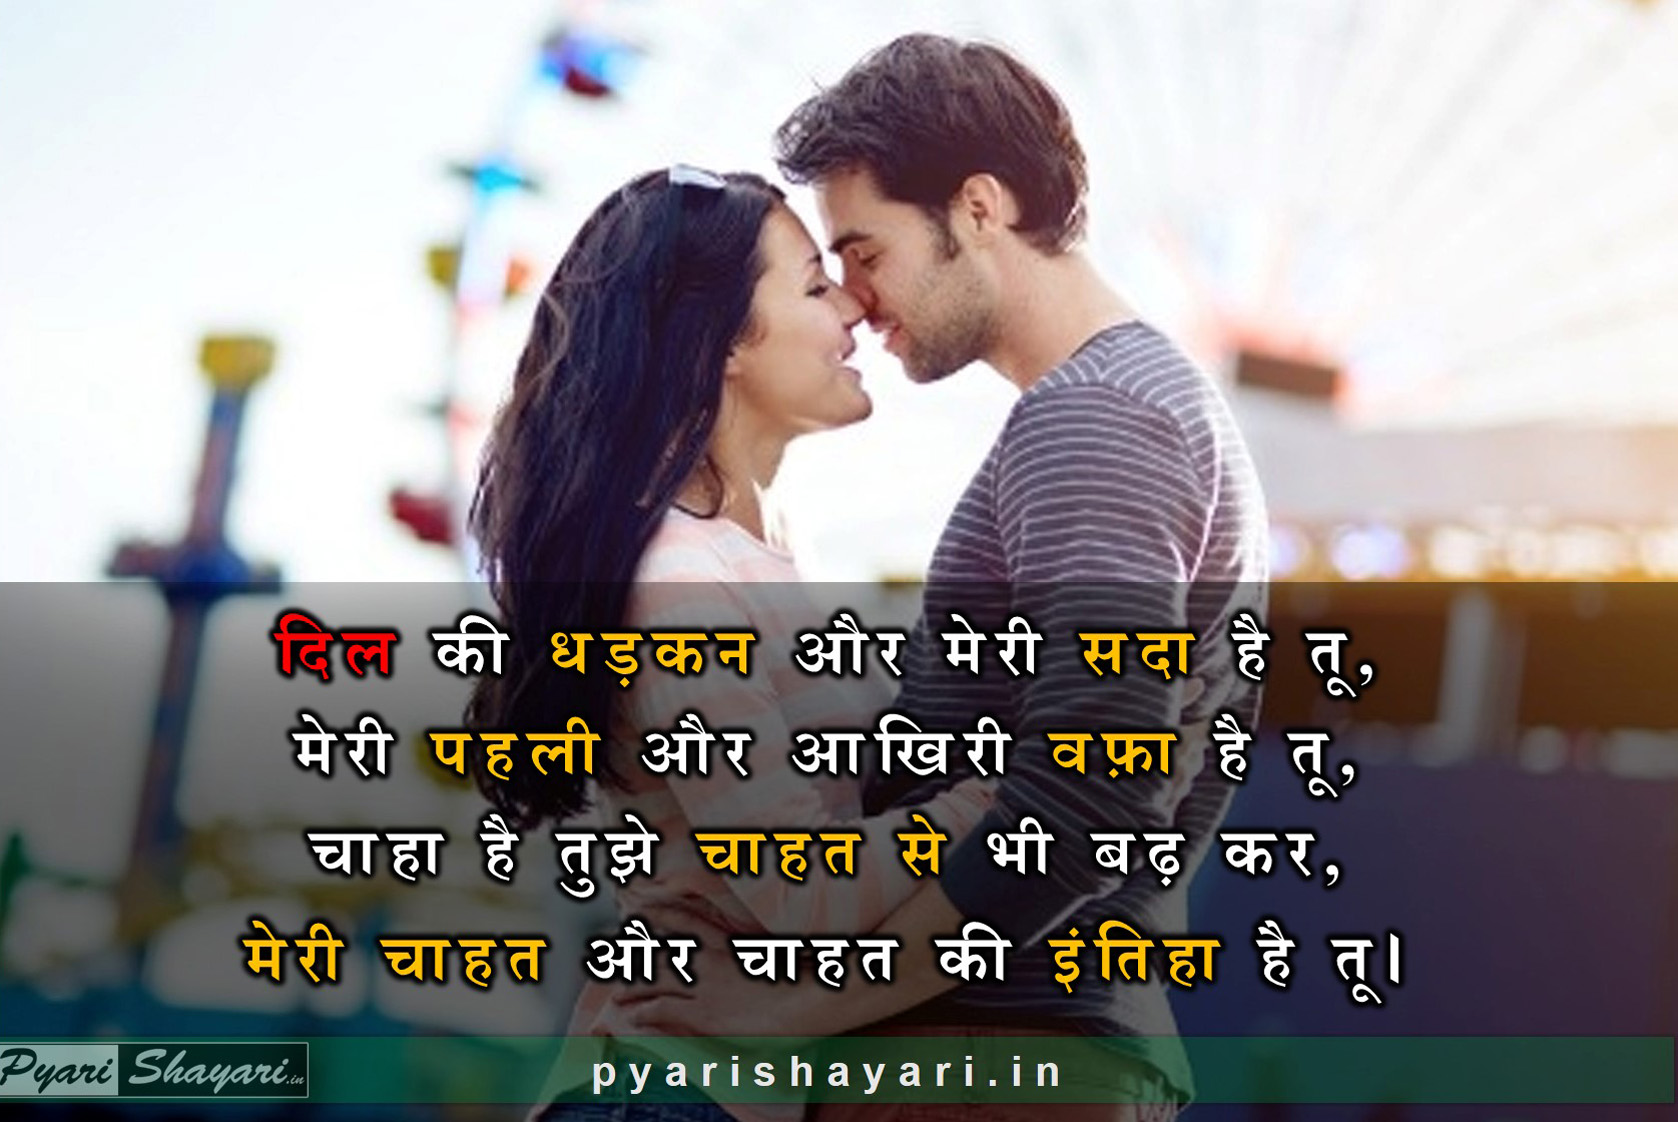 प्यारभरी शायरी Romantic Shayari | 30 Best Hindi Love ...